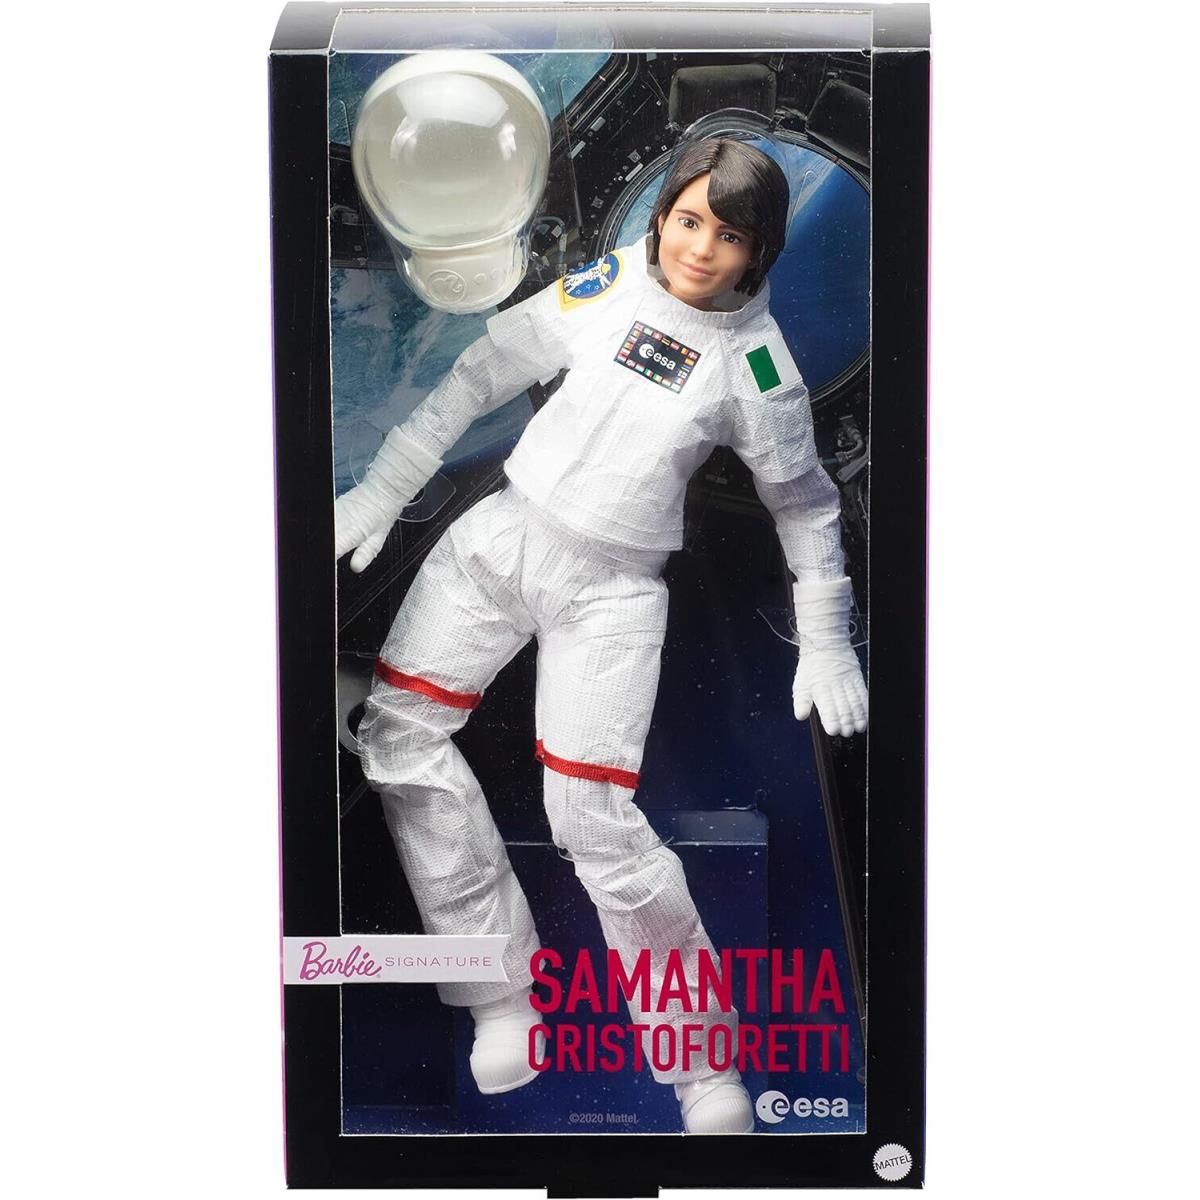 Barbie Signature Esa Astronaut Samantha Cristoforetti Doll- Nrfb GTJ81